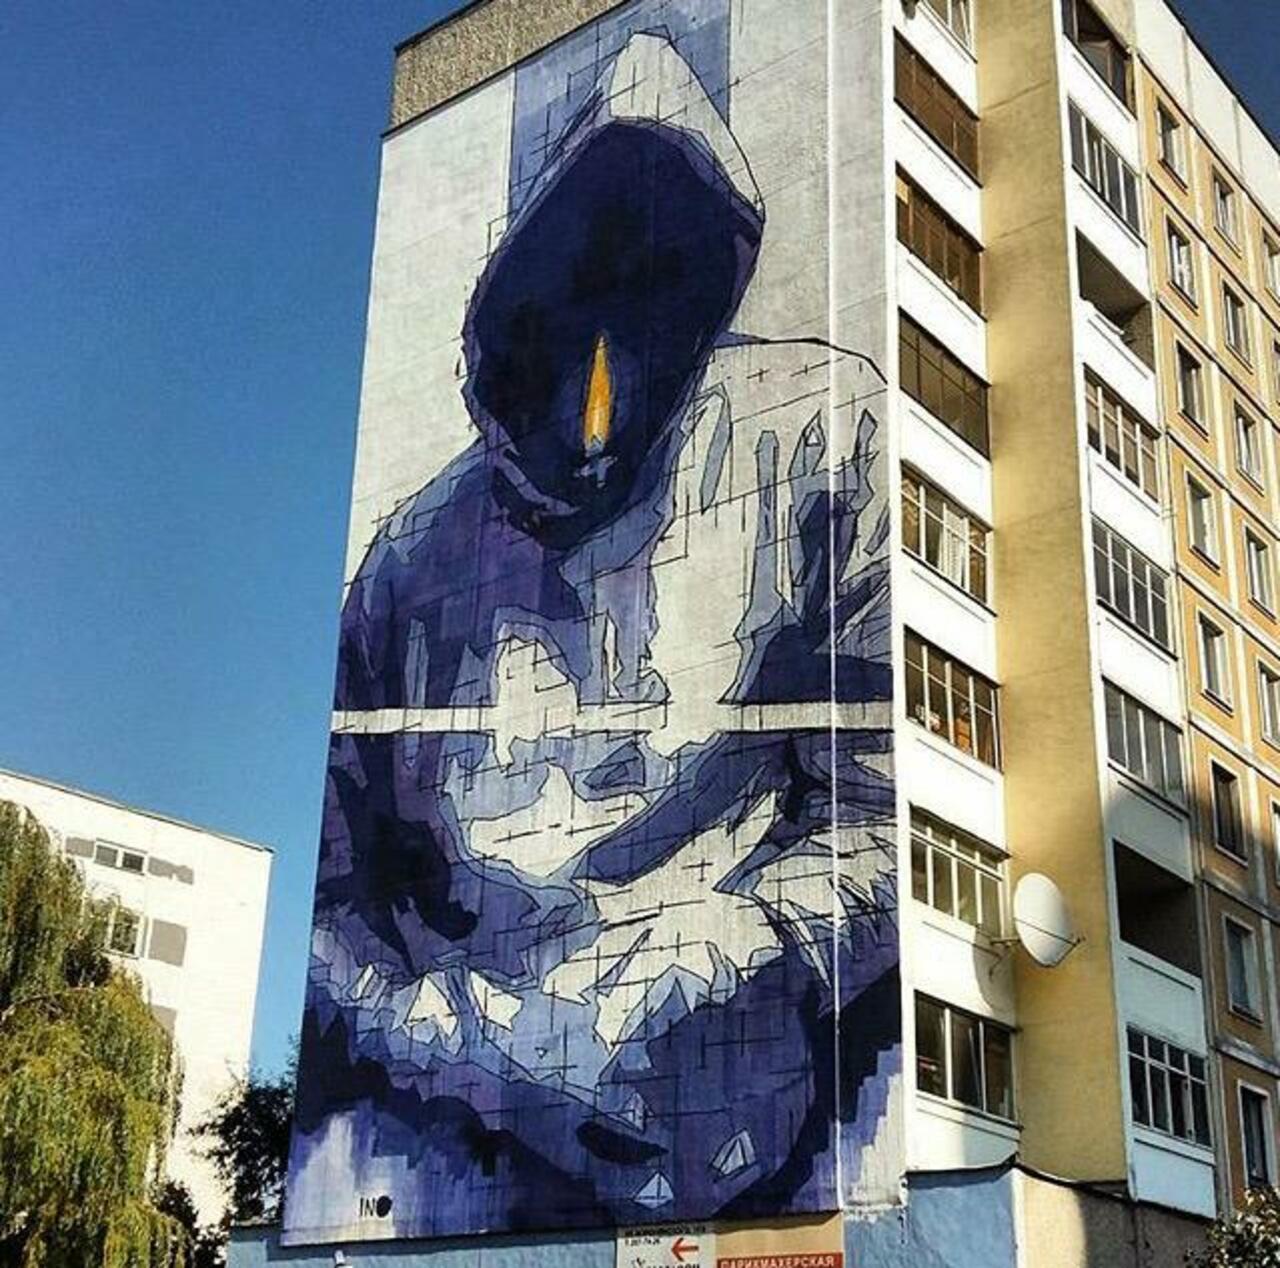 RT @GoogleStreetArt: 'Man With No Name' 
New Street Art by iNO in Minsk, Belarus 

#art #graffiti #mural #streetart http://t.co/1OdqWDe3OD